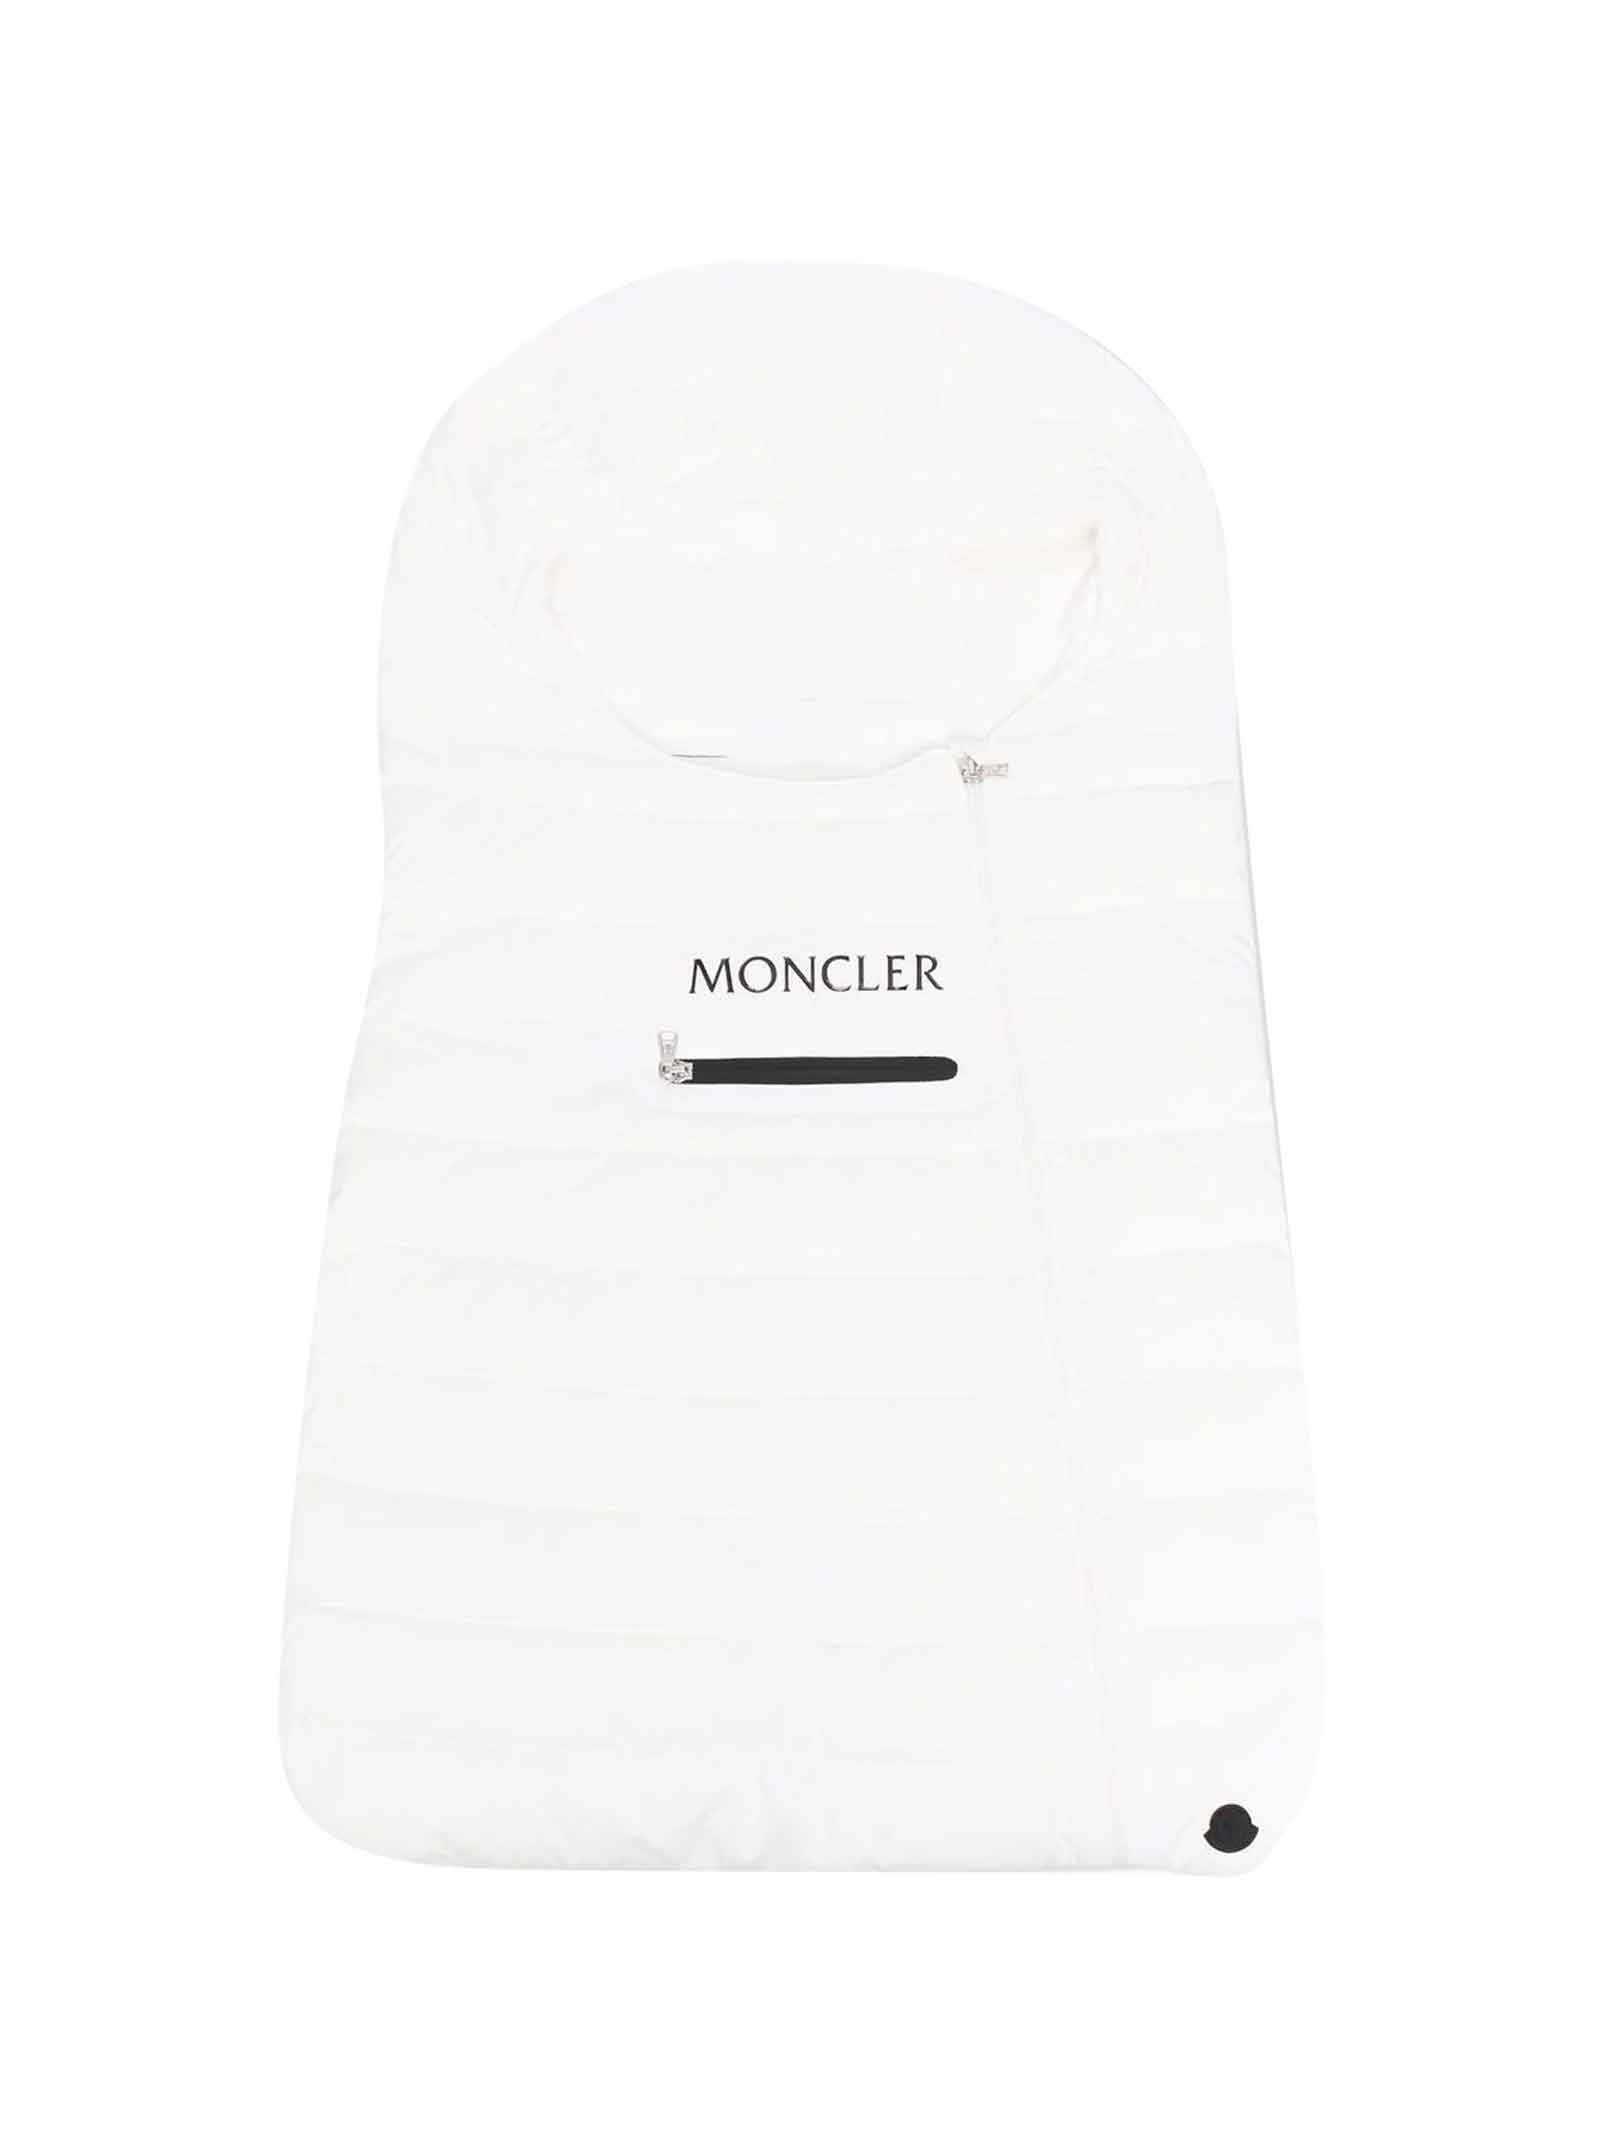 Moncler White Sleeping Bag Baby Unisex